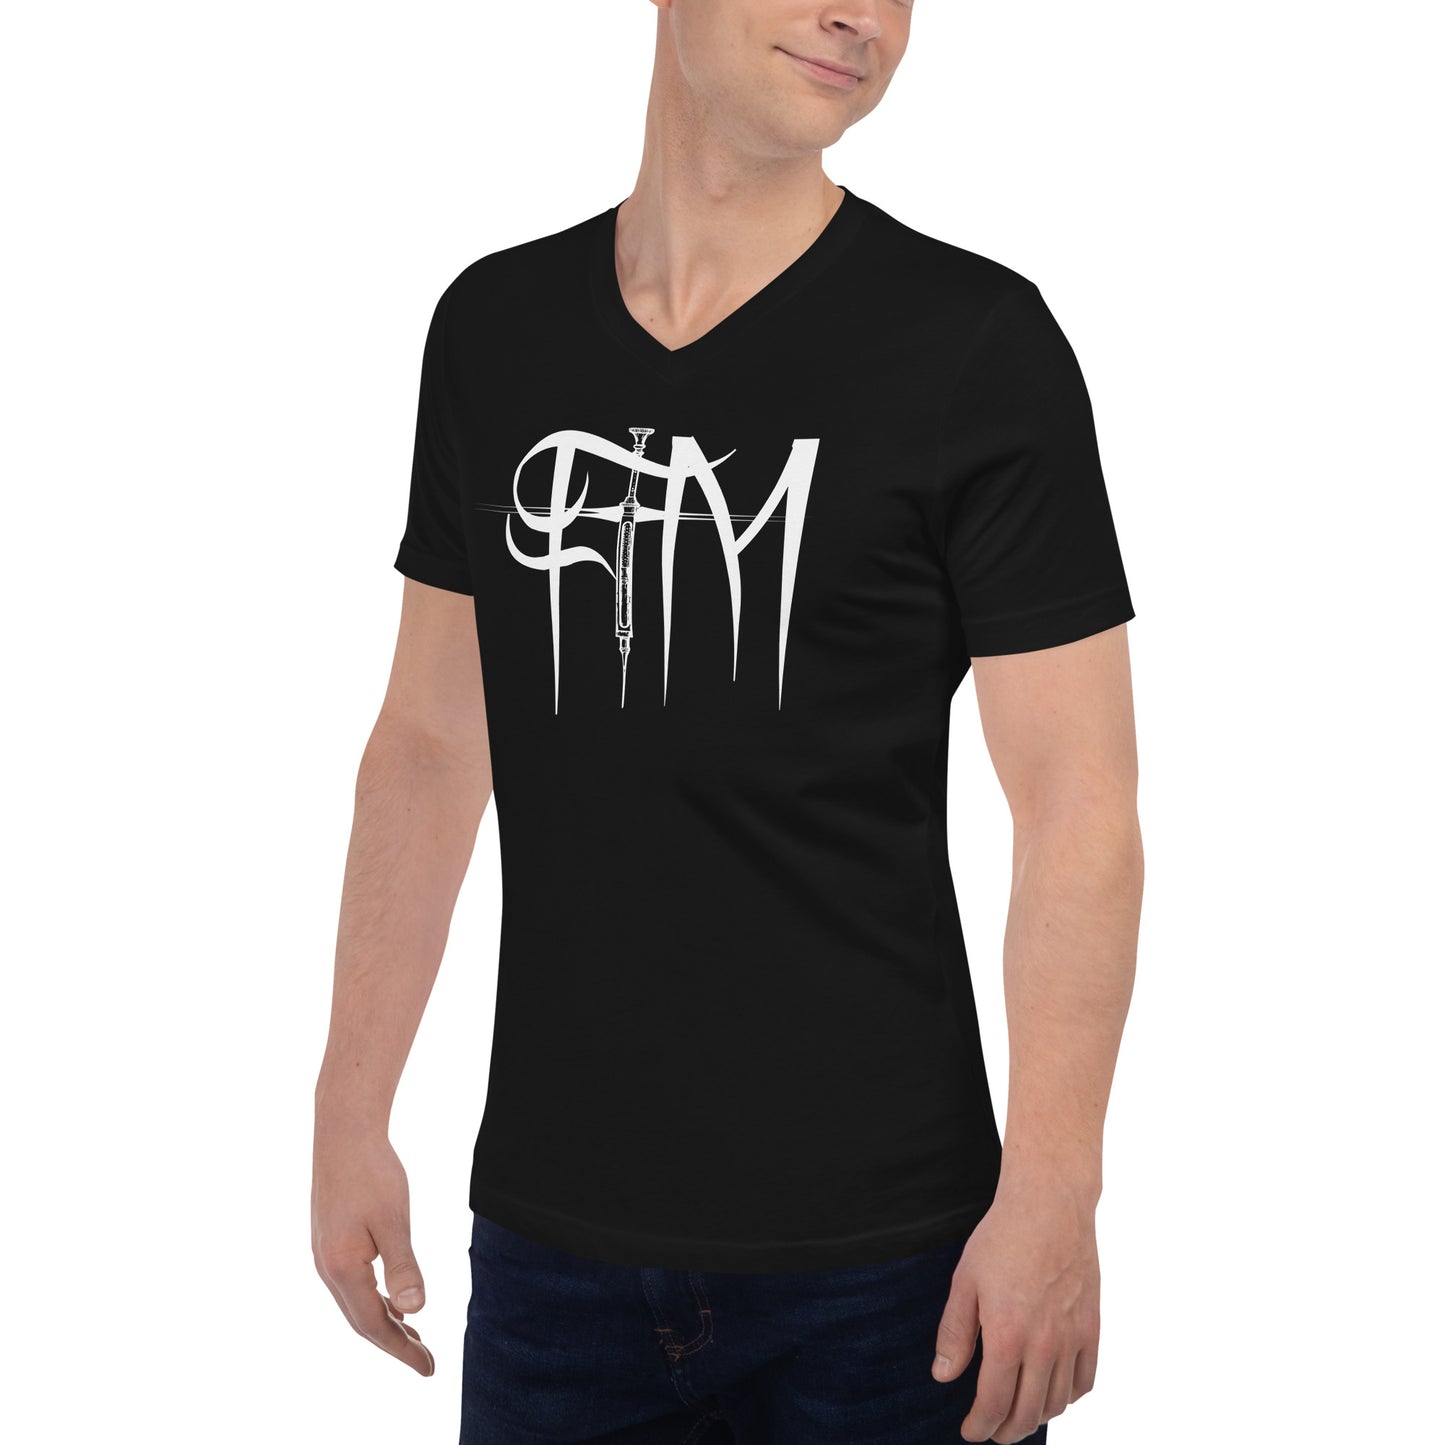 FTM Syringe Trans Empowerment - Unisex Short Sleeve V-Neck T-Shirt